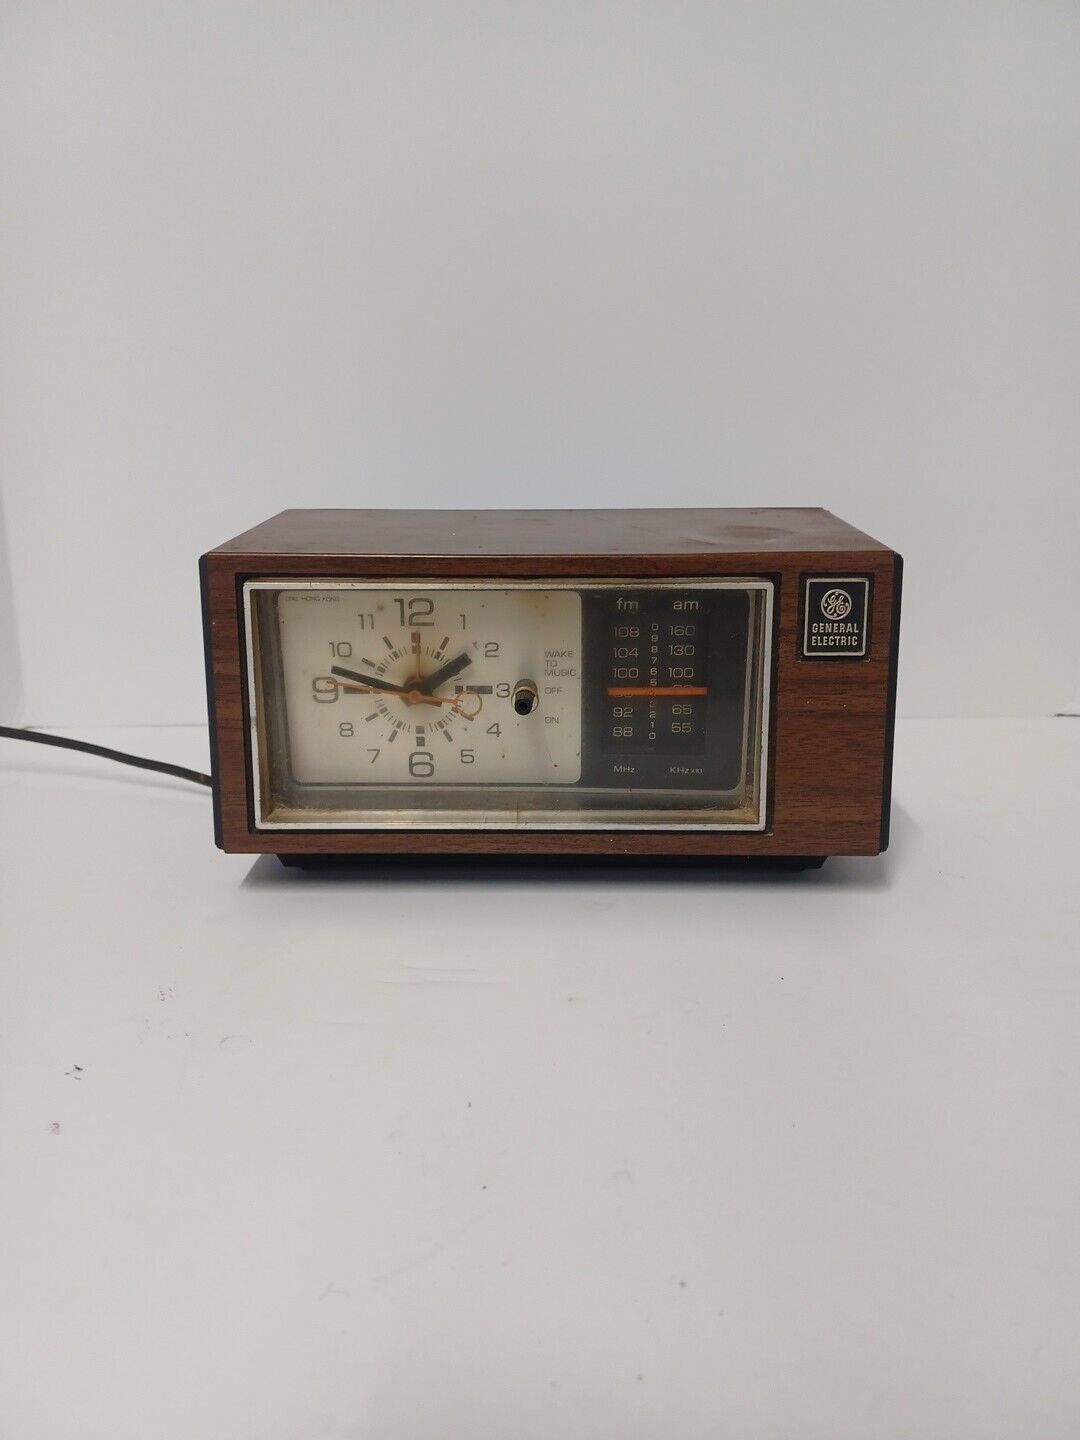 General Electric GE Alarm Clock AM/FM Radio Cracked Screen Model 7-4550C Works